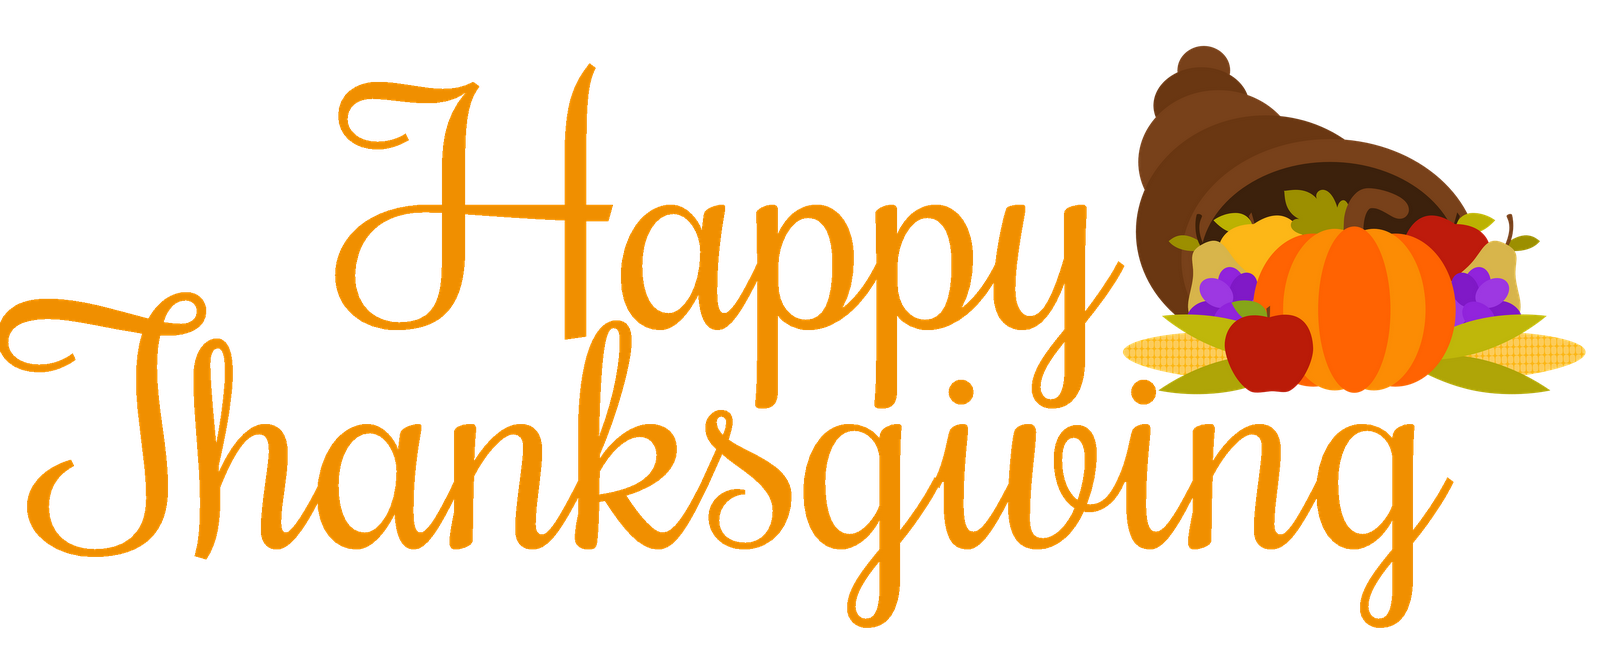 happy thanksgiving turkey cli